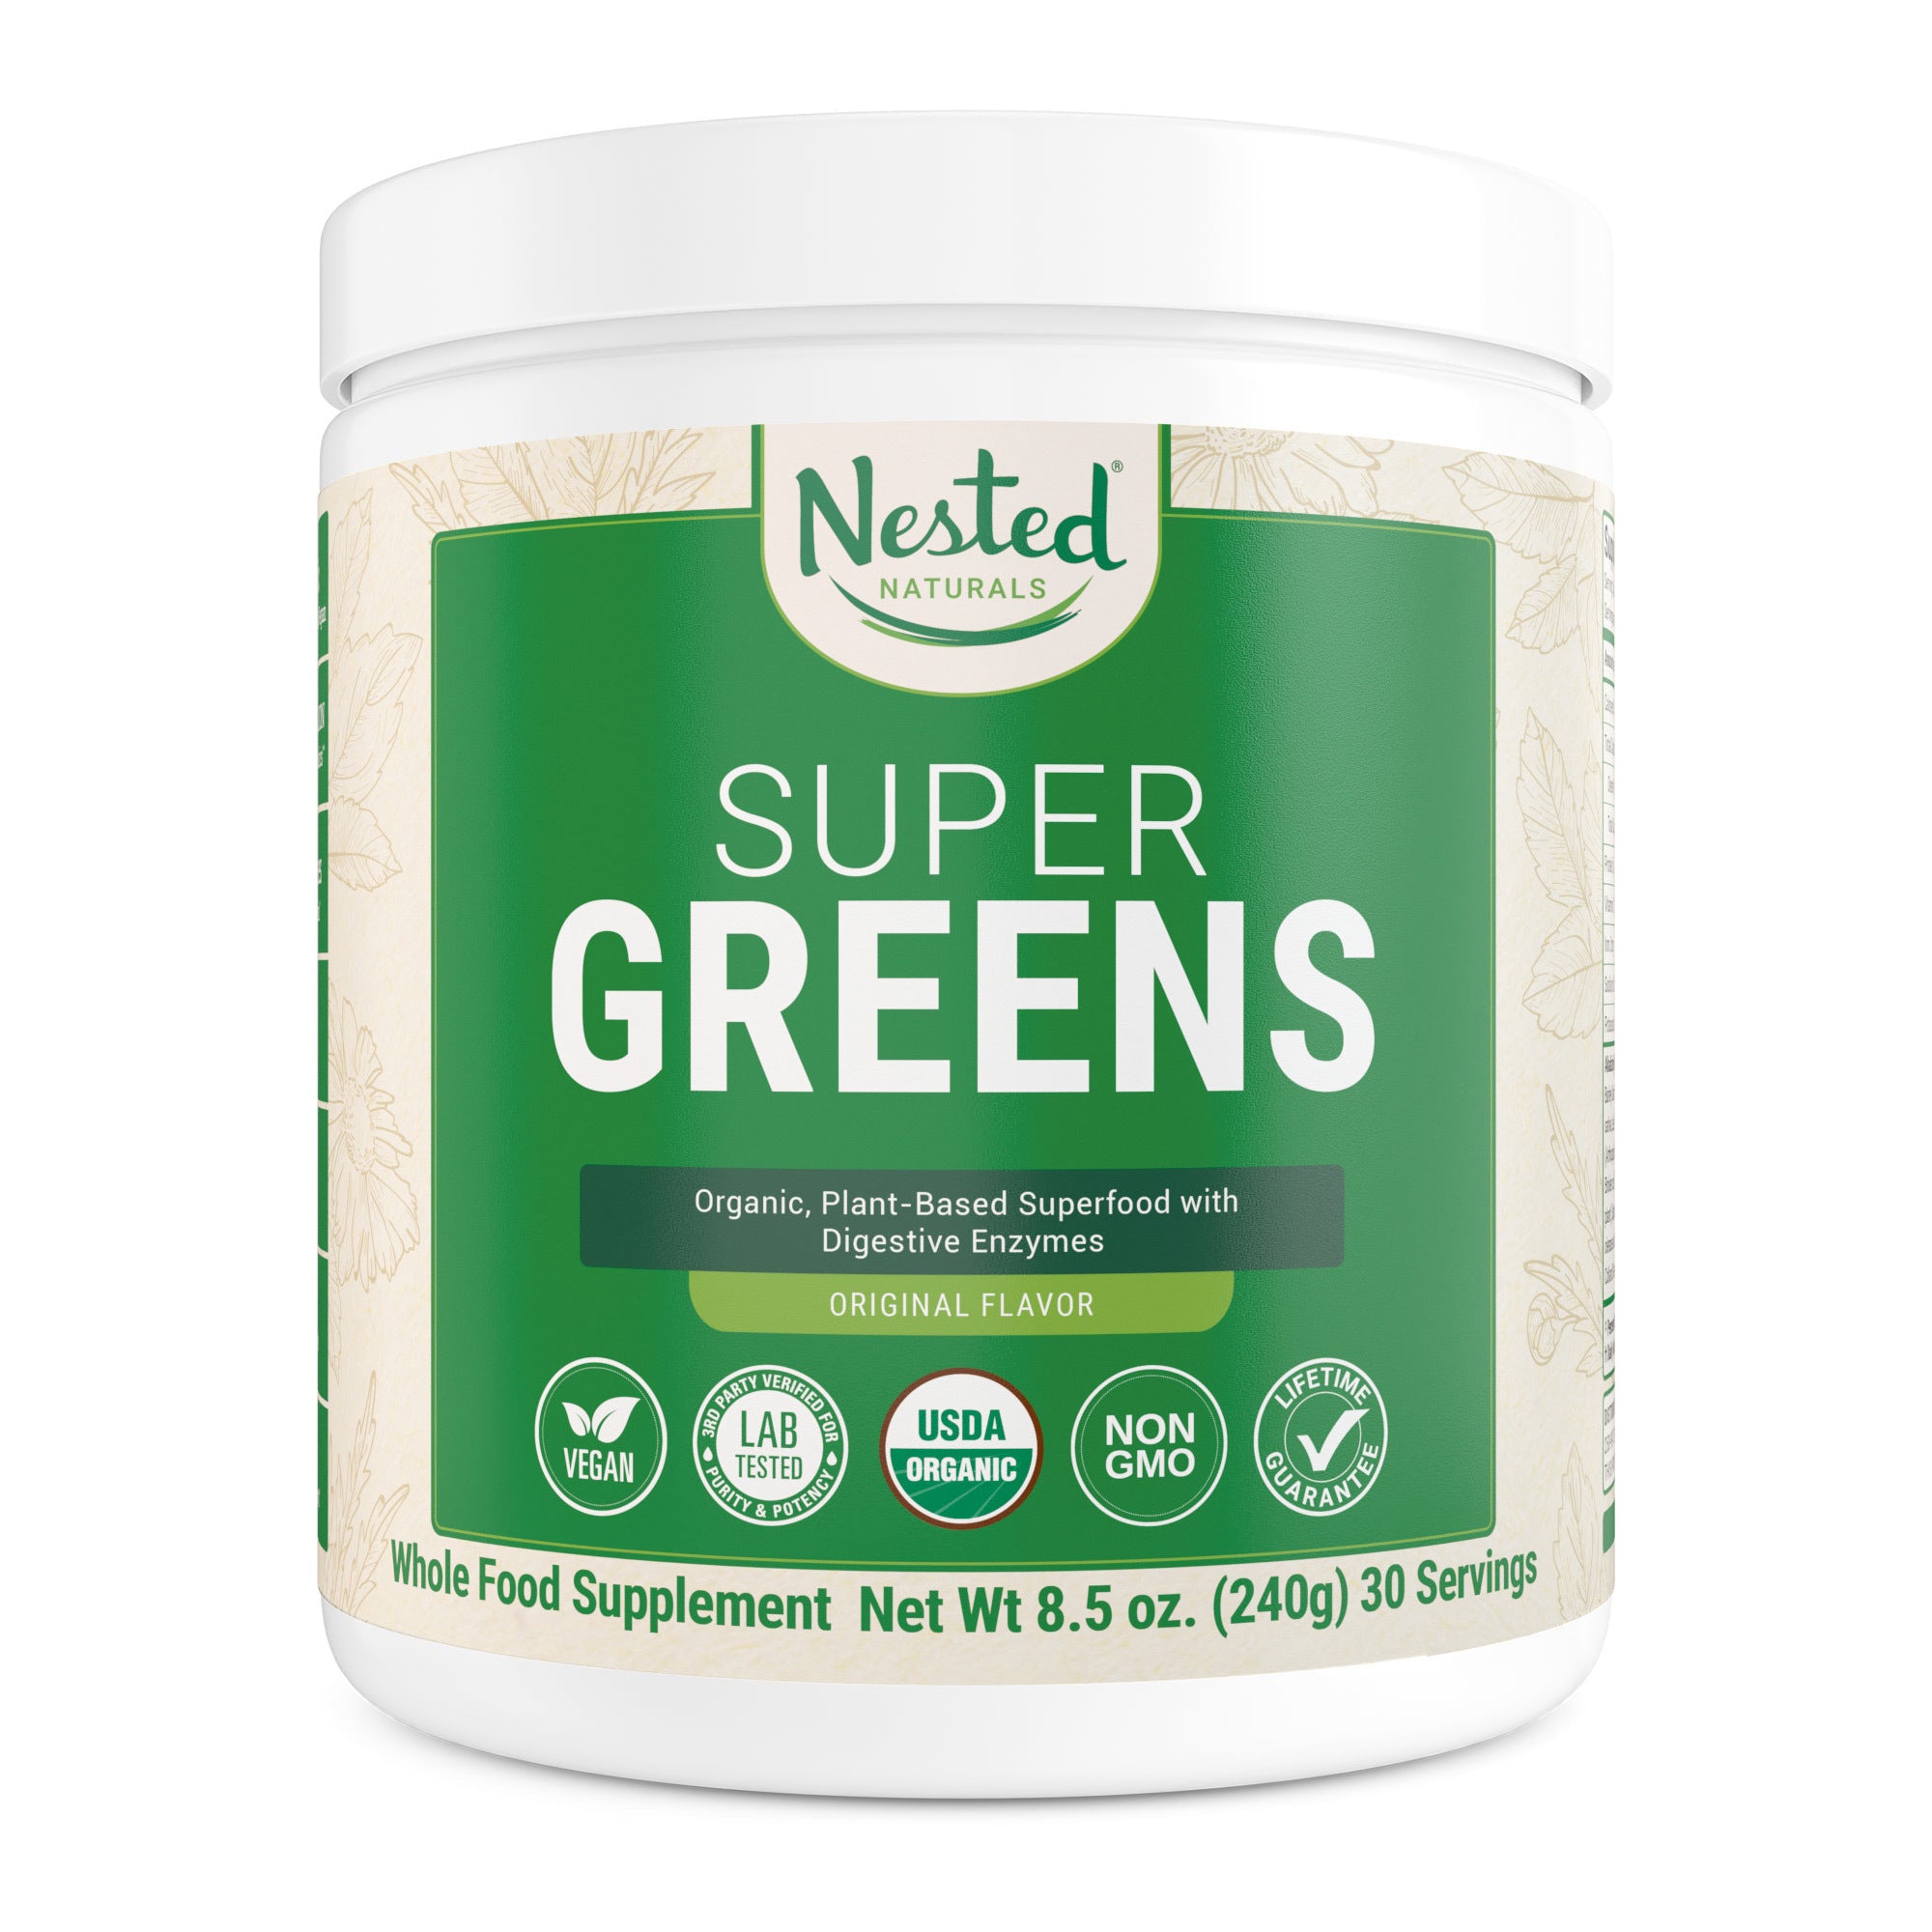 Greens & Superfoods